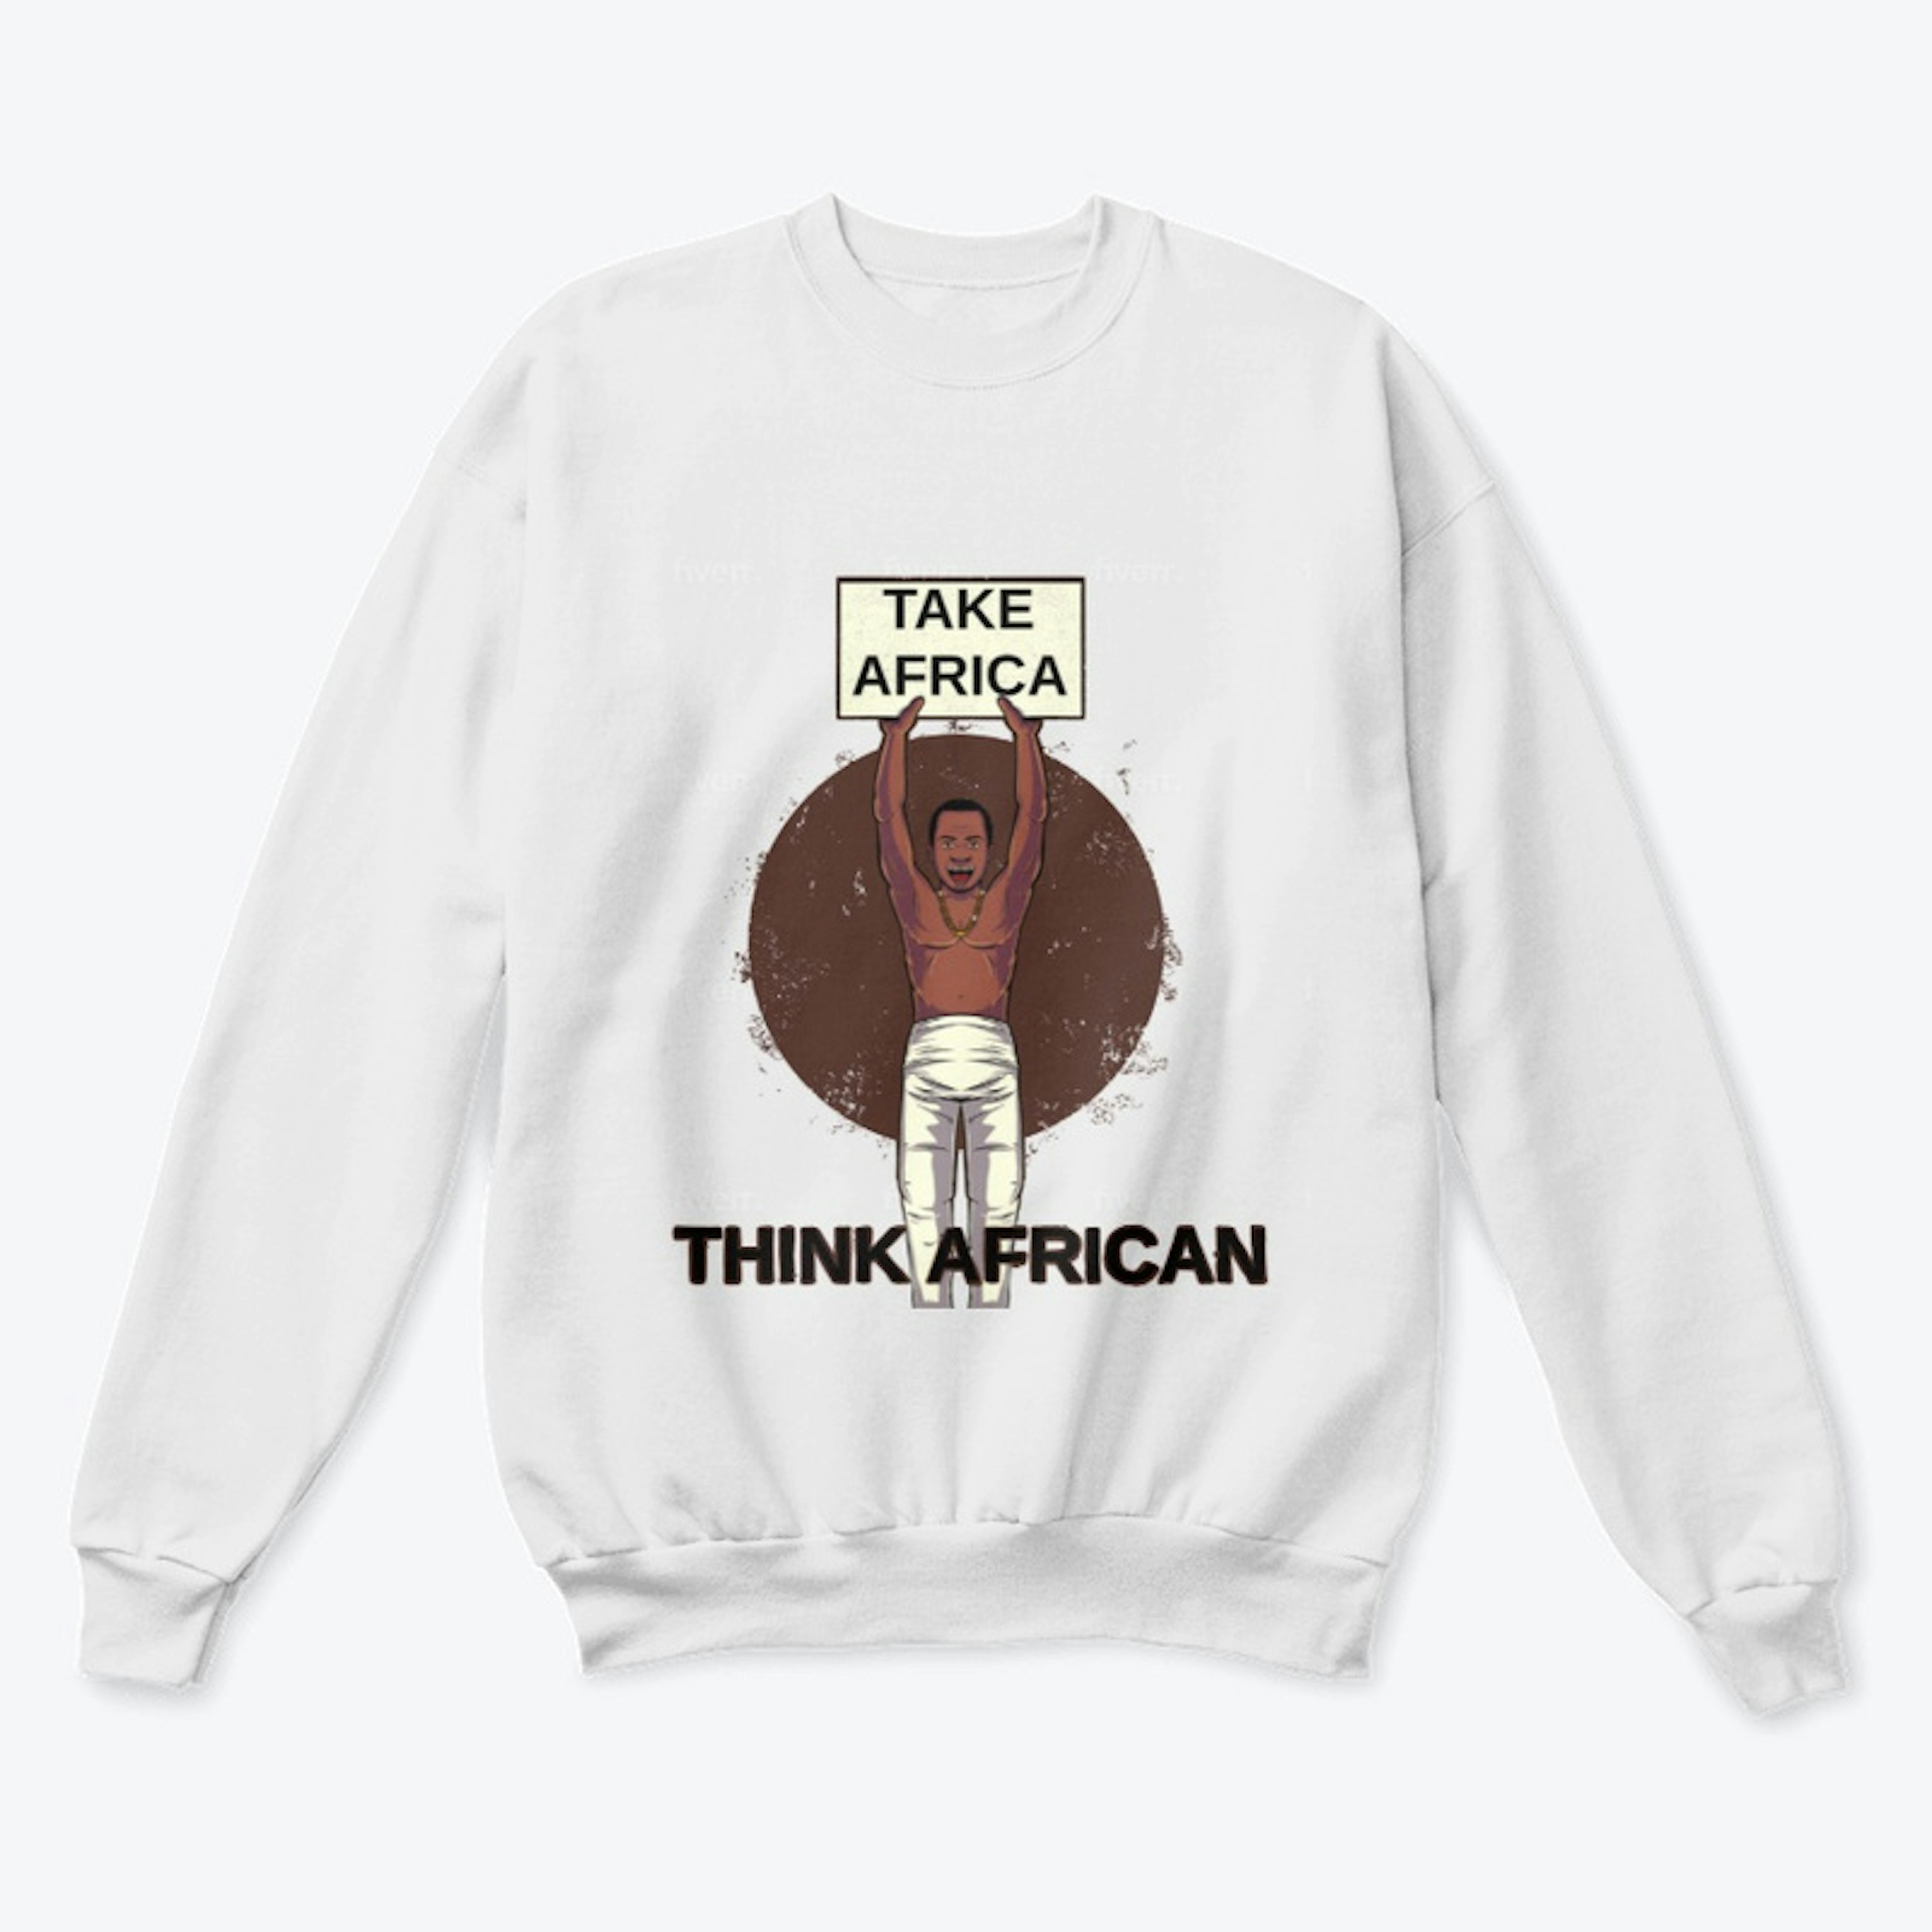 "THINK AFRICAN" LONG SLEEVE TEE